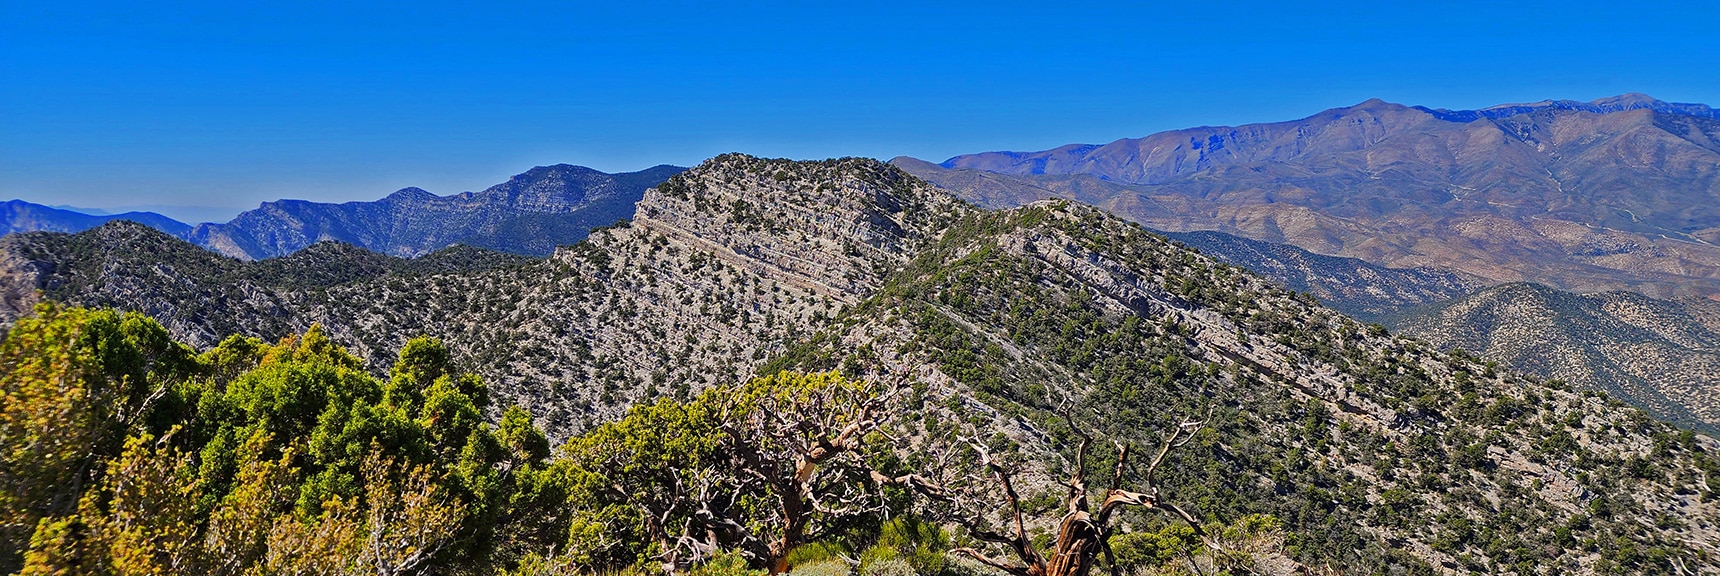 El Bastardo Mt from Burnt Peak Summit. Griffith Peak and Sexton Ridge to Right | Kyle Canyon Grand Crossing | Northern Half | La Madre Mountains Wilderness, Nevada